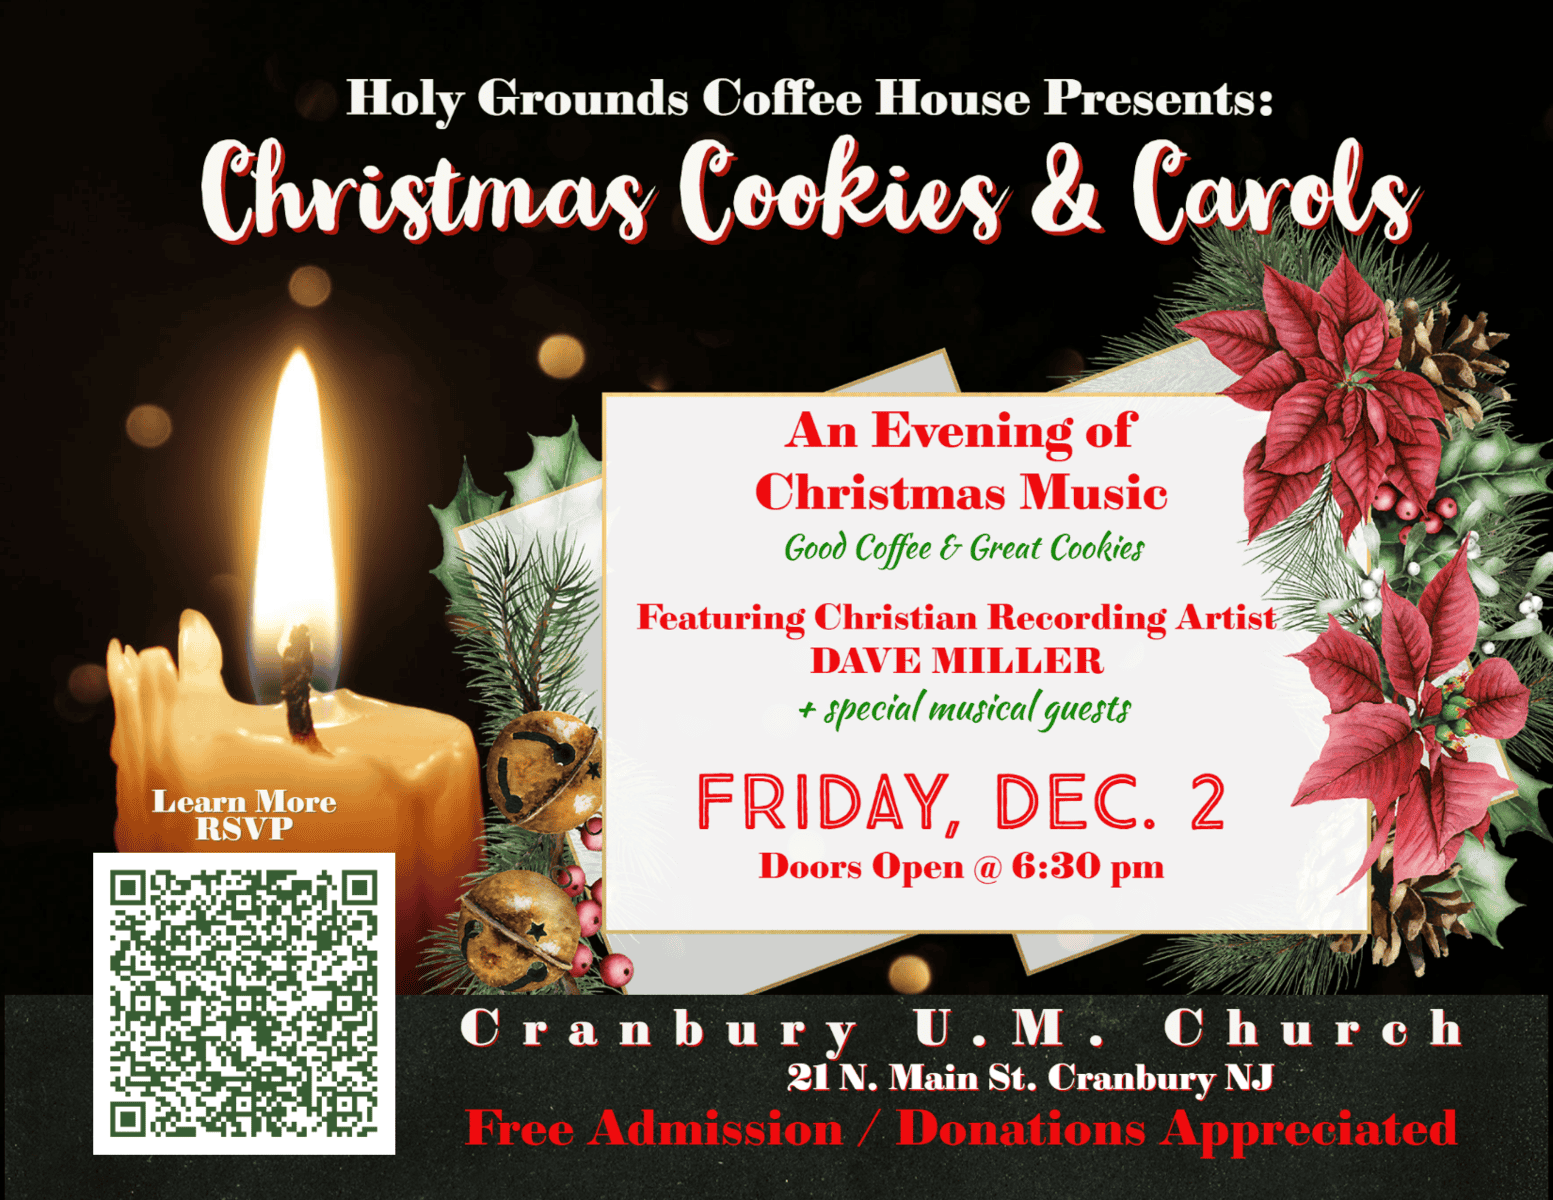 Holy Grounds Coffee House's Christmas Cookies & Carols